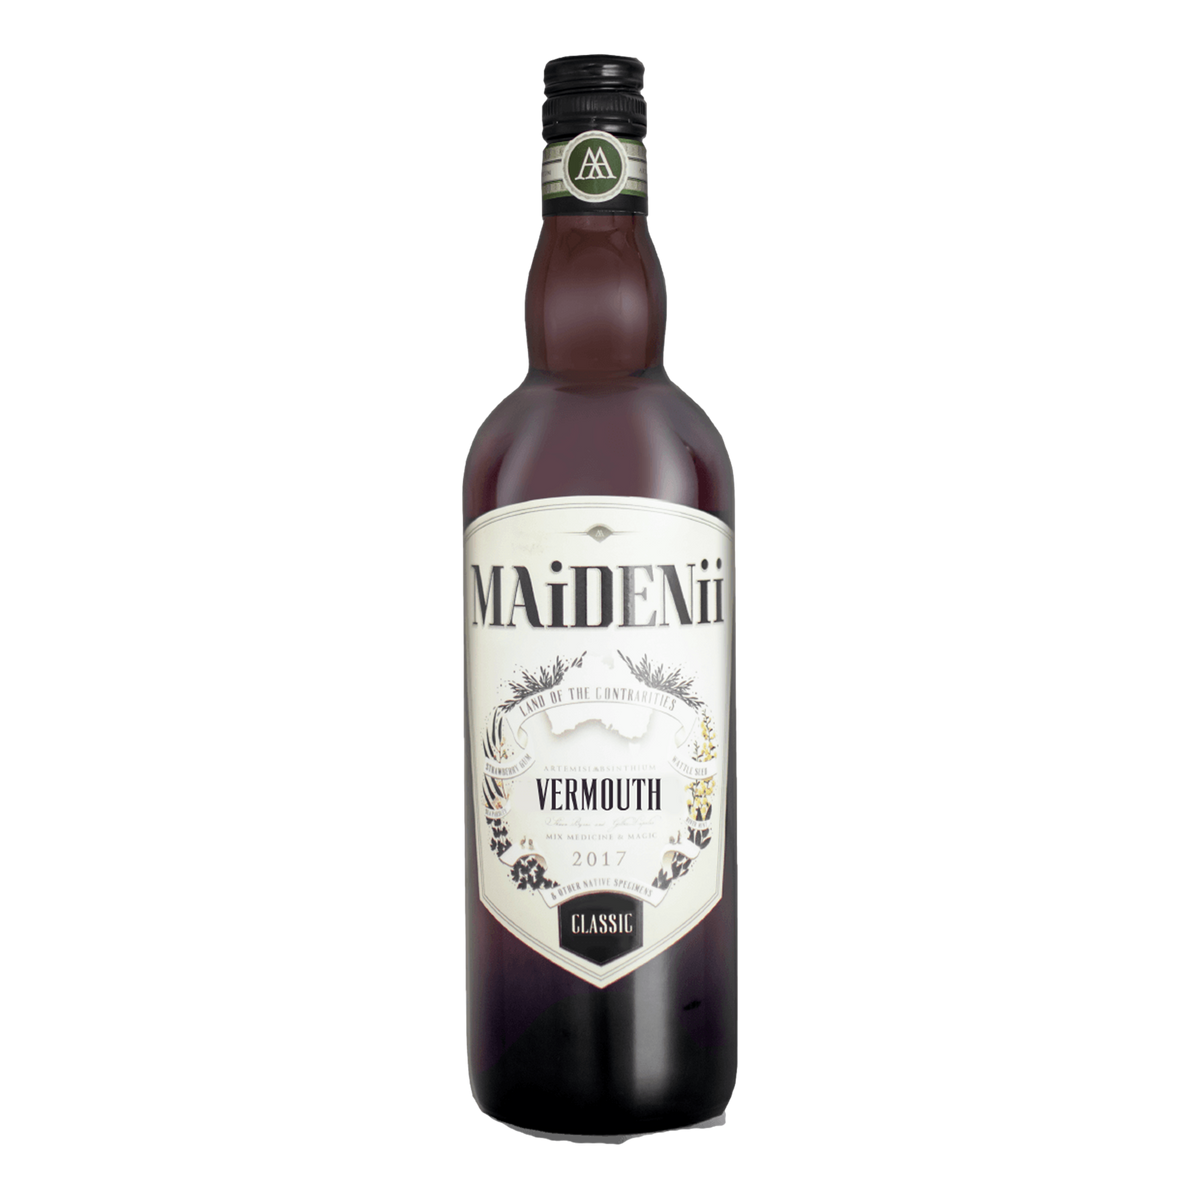 Maidenii Classic Vermouth 750ml